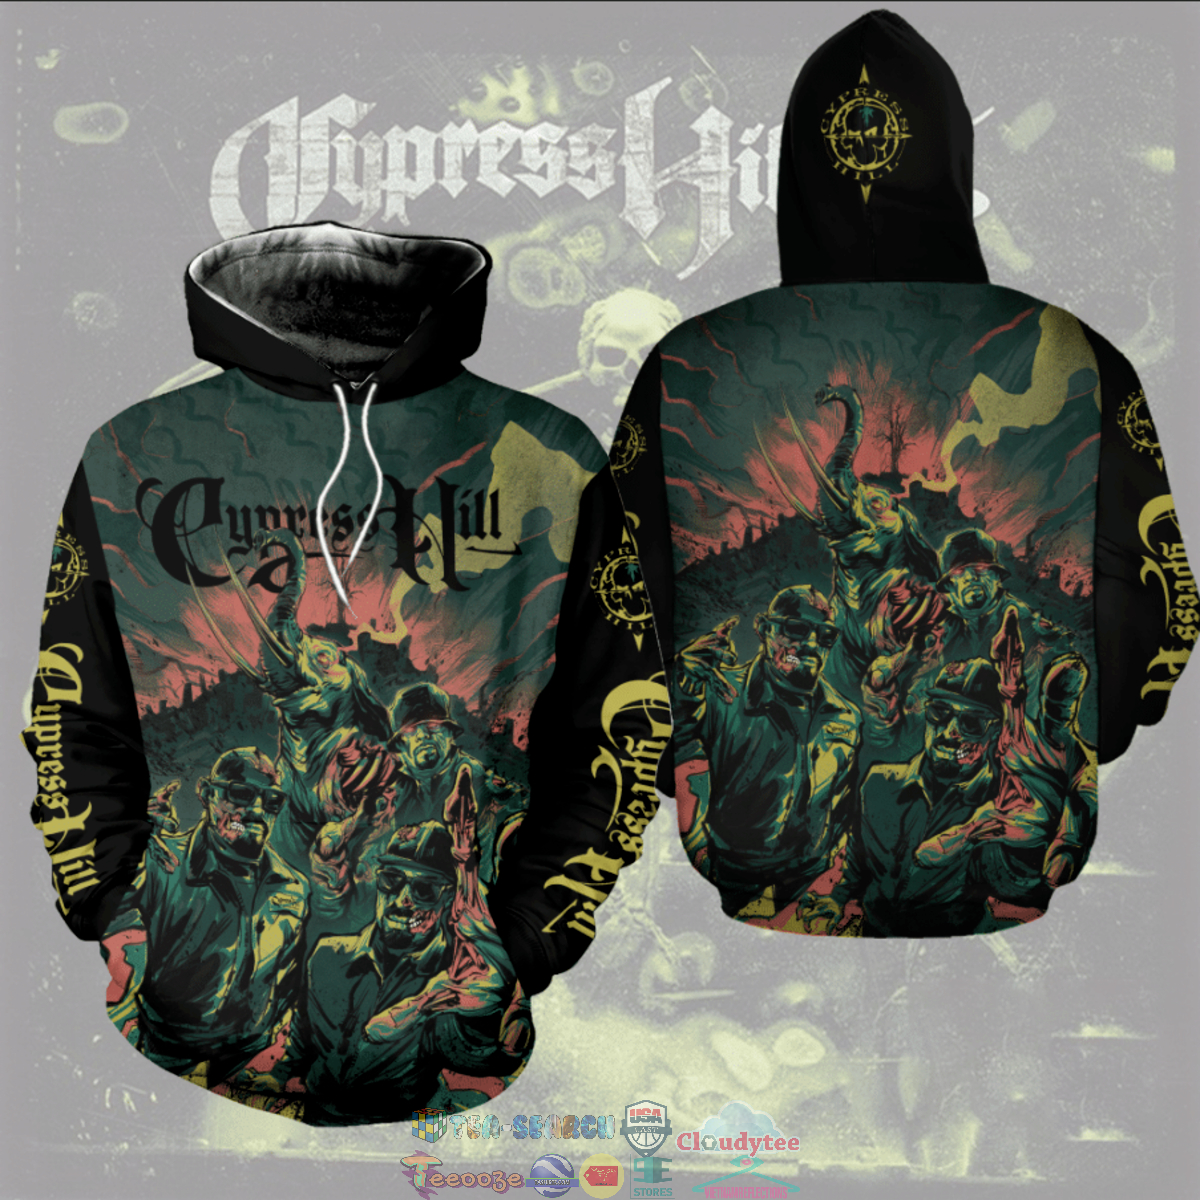 Cypress Hill ver 2 3D hoodie and t-shirt – Saleoff